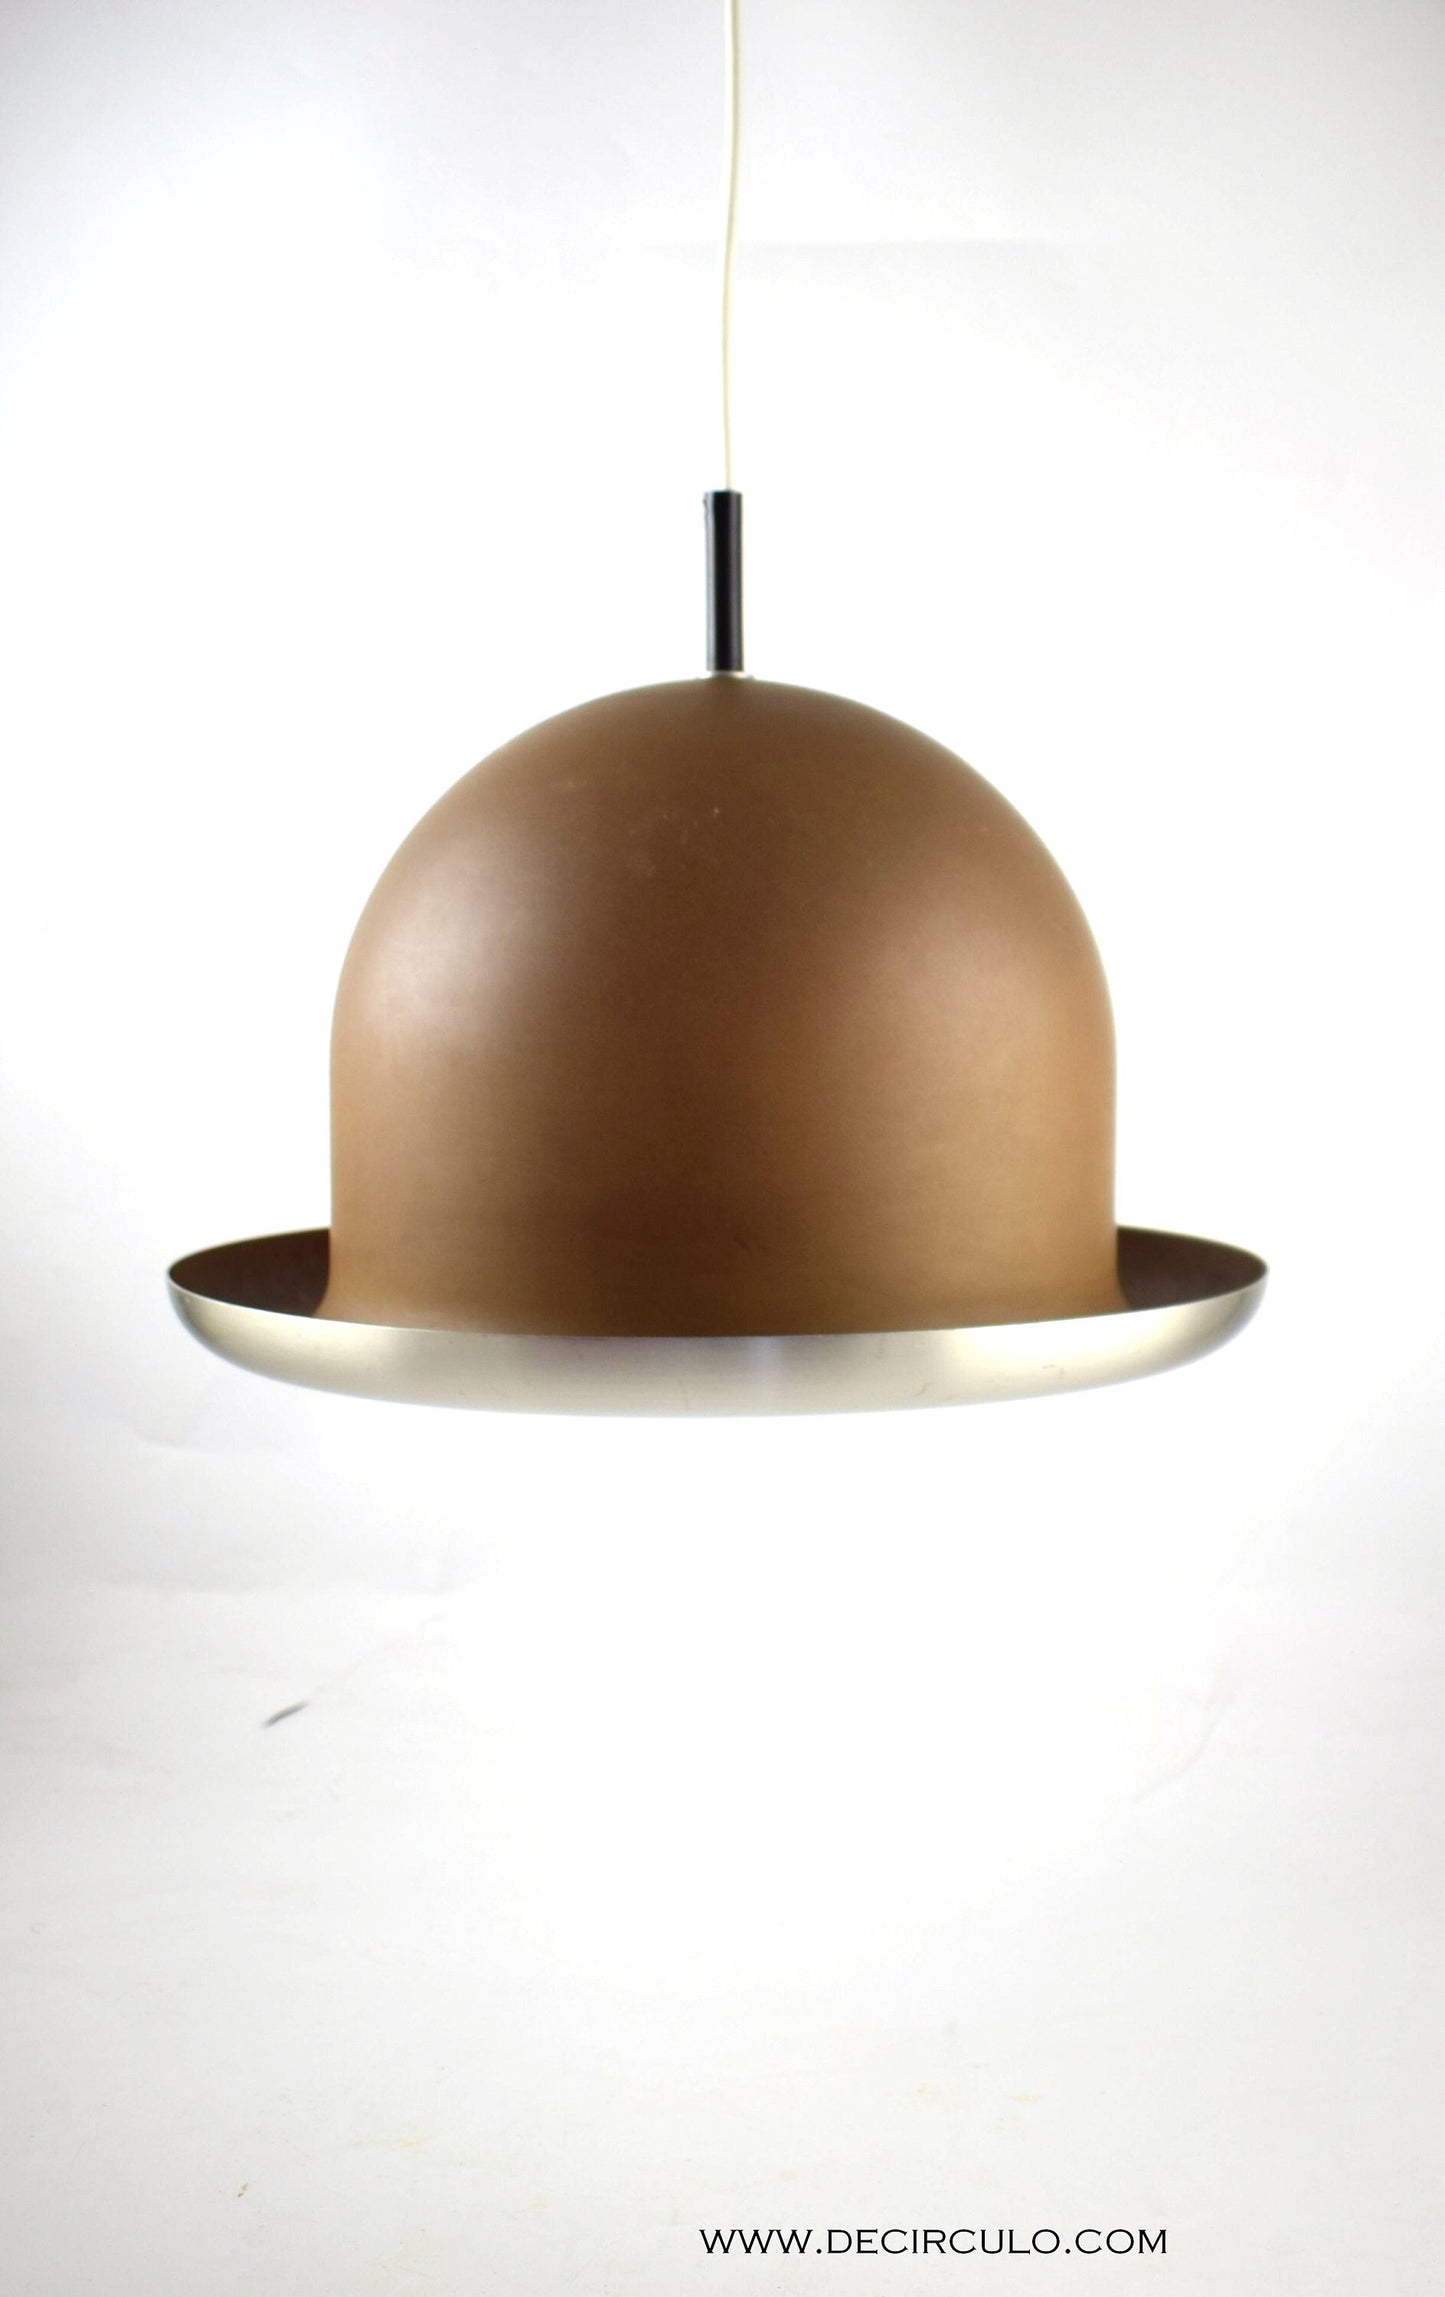 Raak Bowler b-1072 pendant lamp by Casati and Ponzio cinnamon brown suspension Lamp from Raak light architects Amsterdam 1972